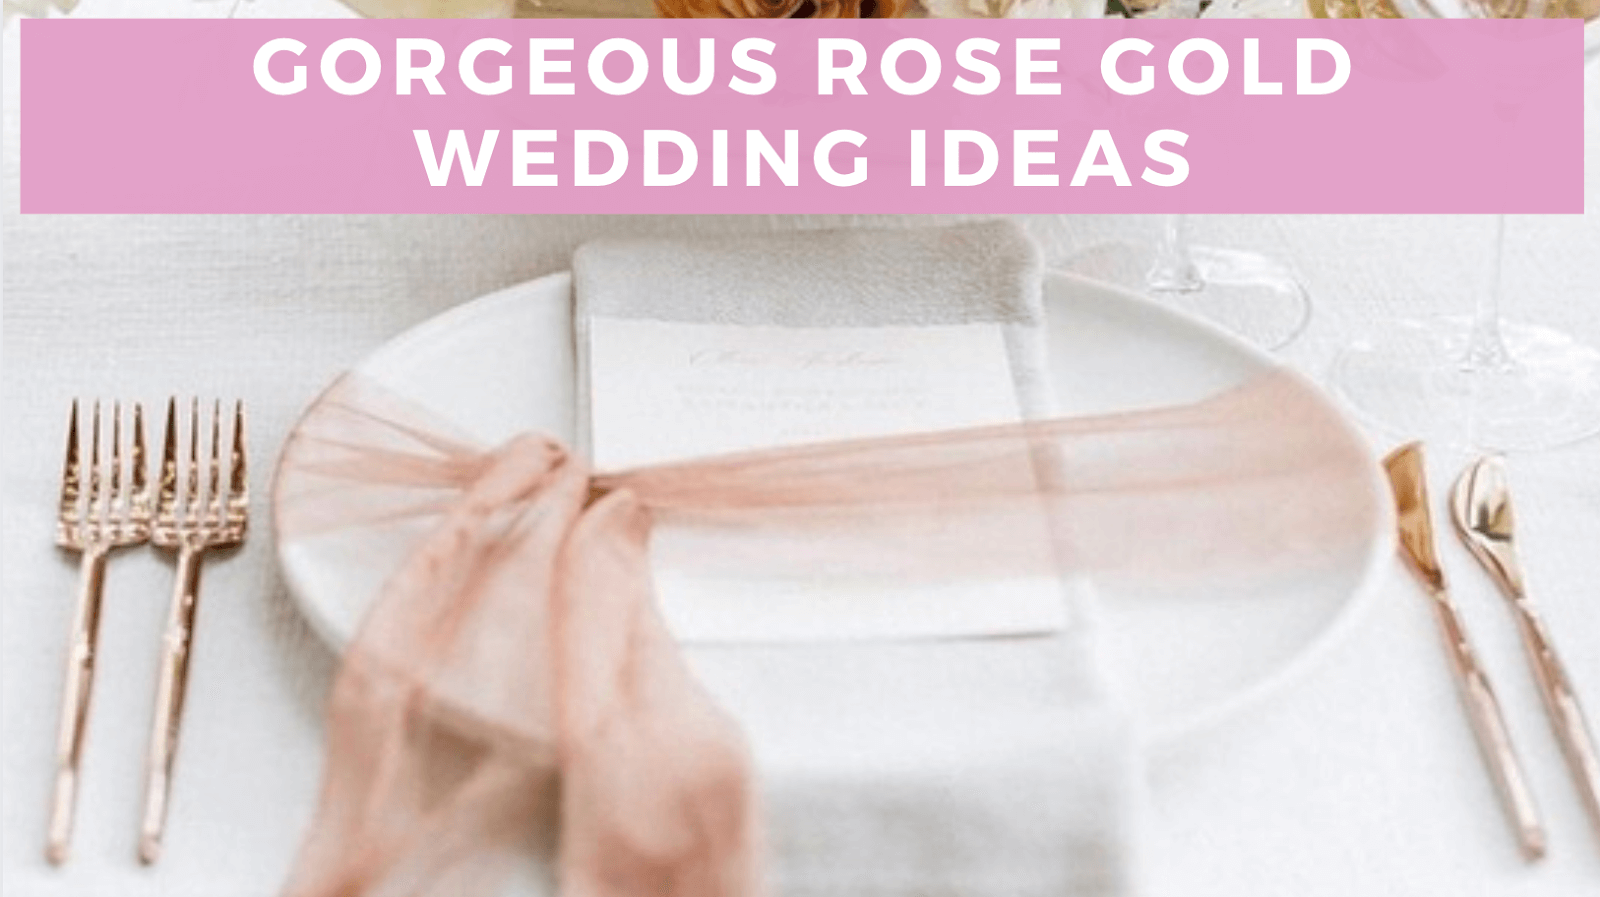 7+ *Awesome* Rose Gold Wedding Ideas